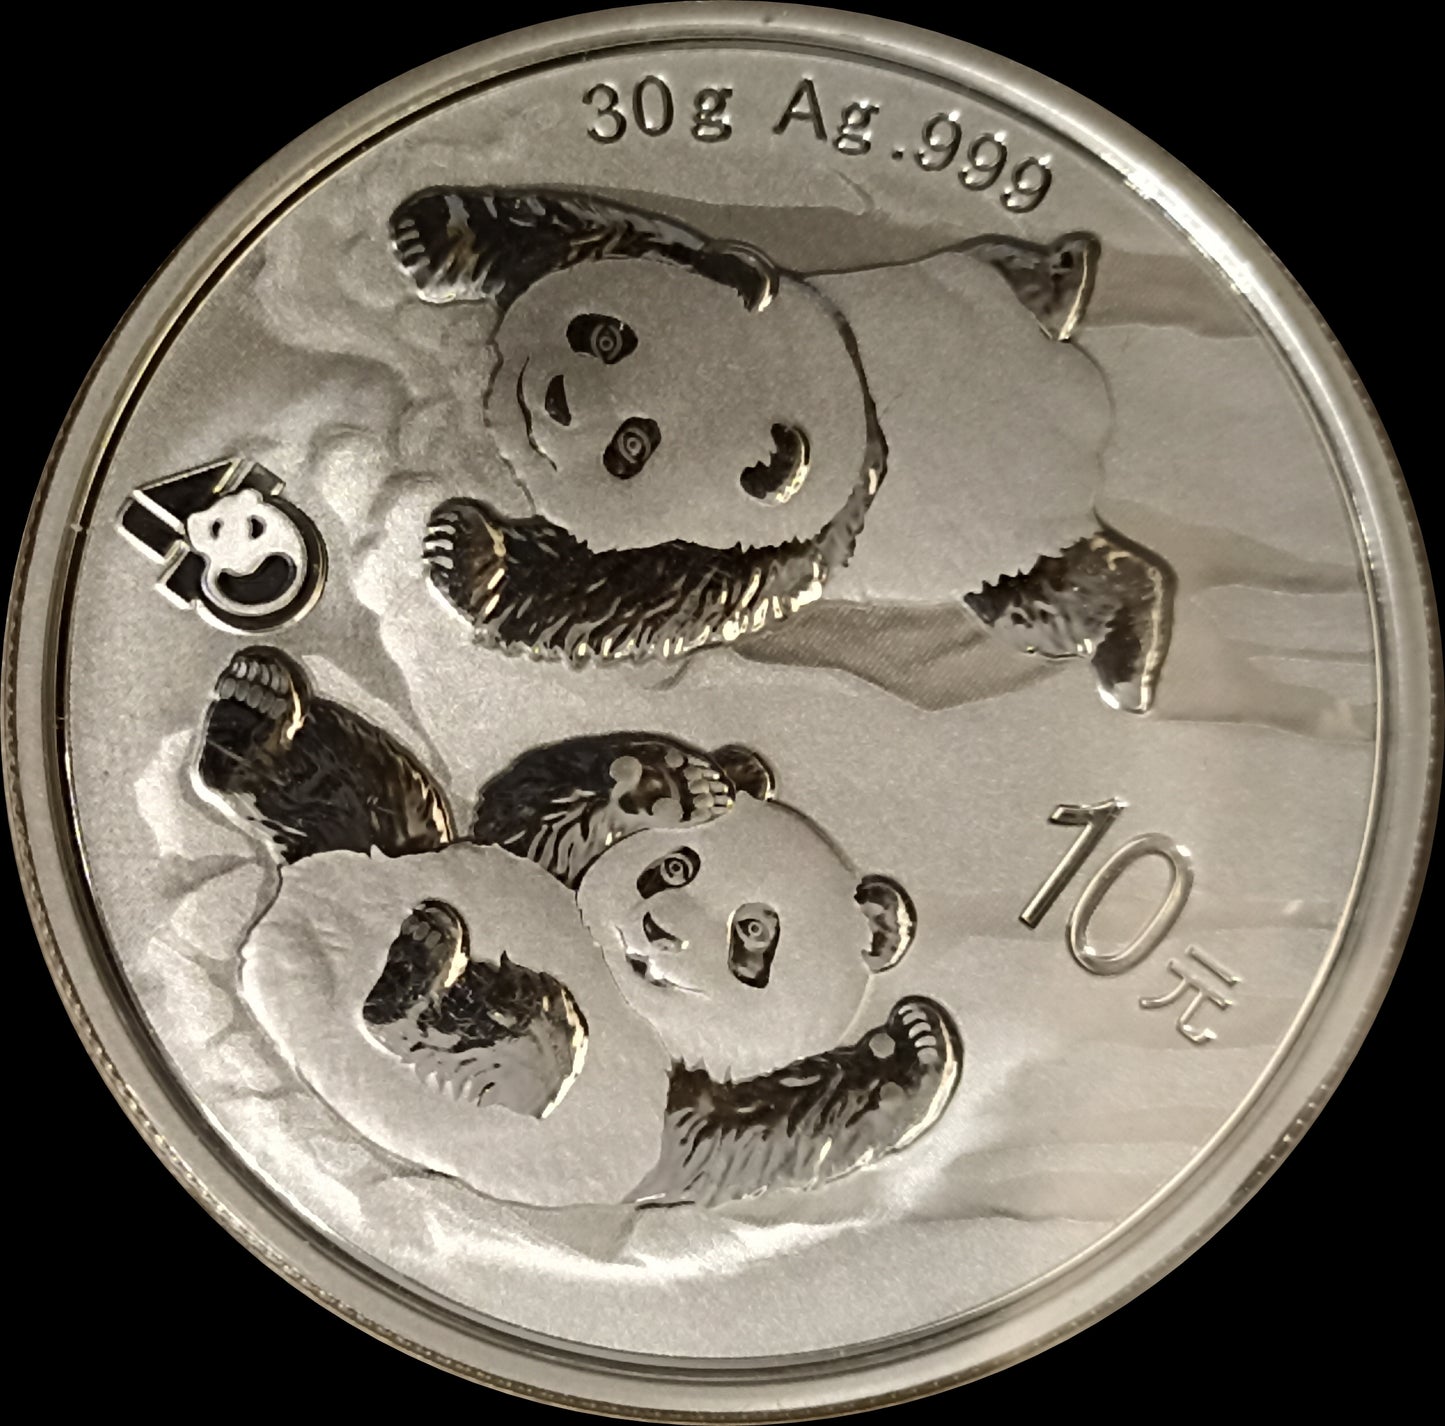 PANDA, China 1 oz silver $1, 2022